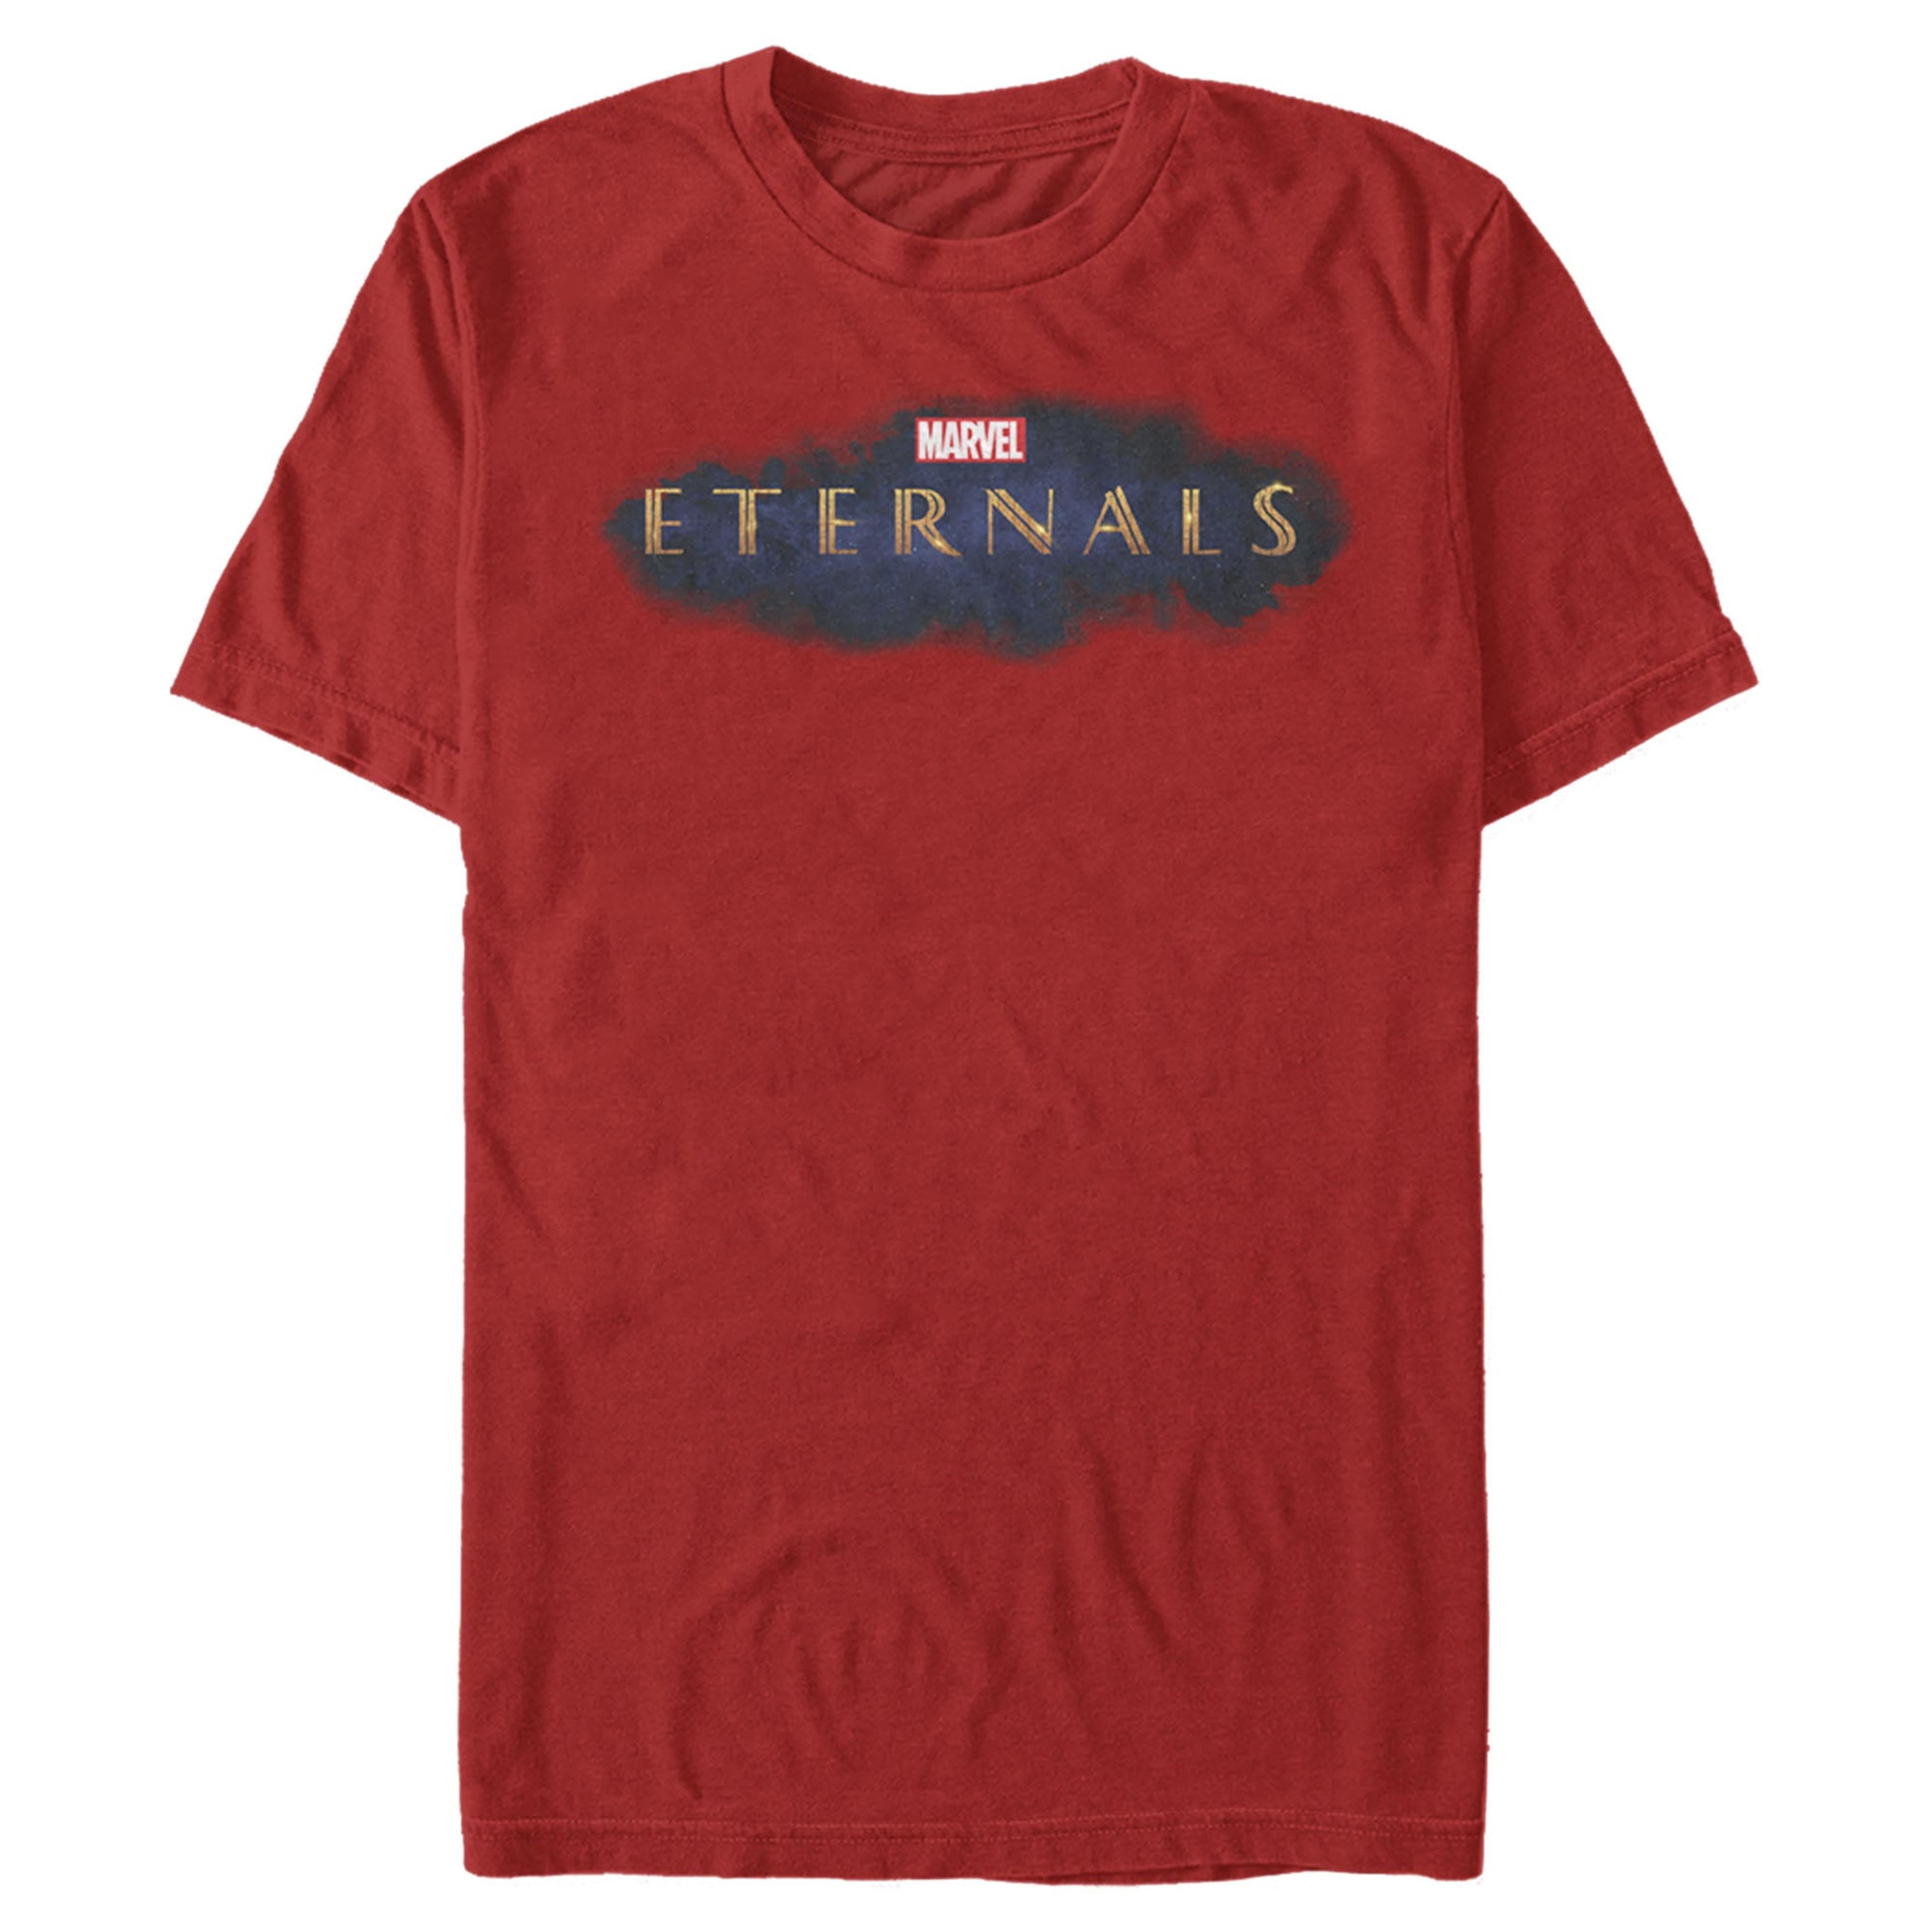 Alternate View 2 of Men's Marvel Eternals Movie Logo T-Shirt